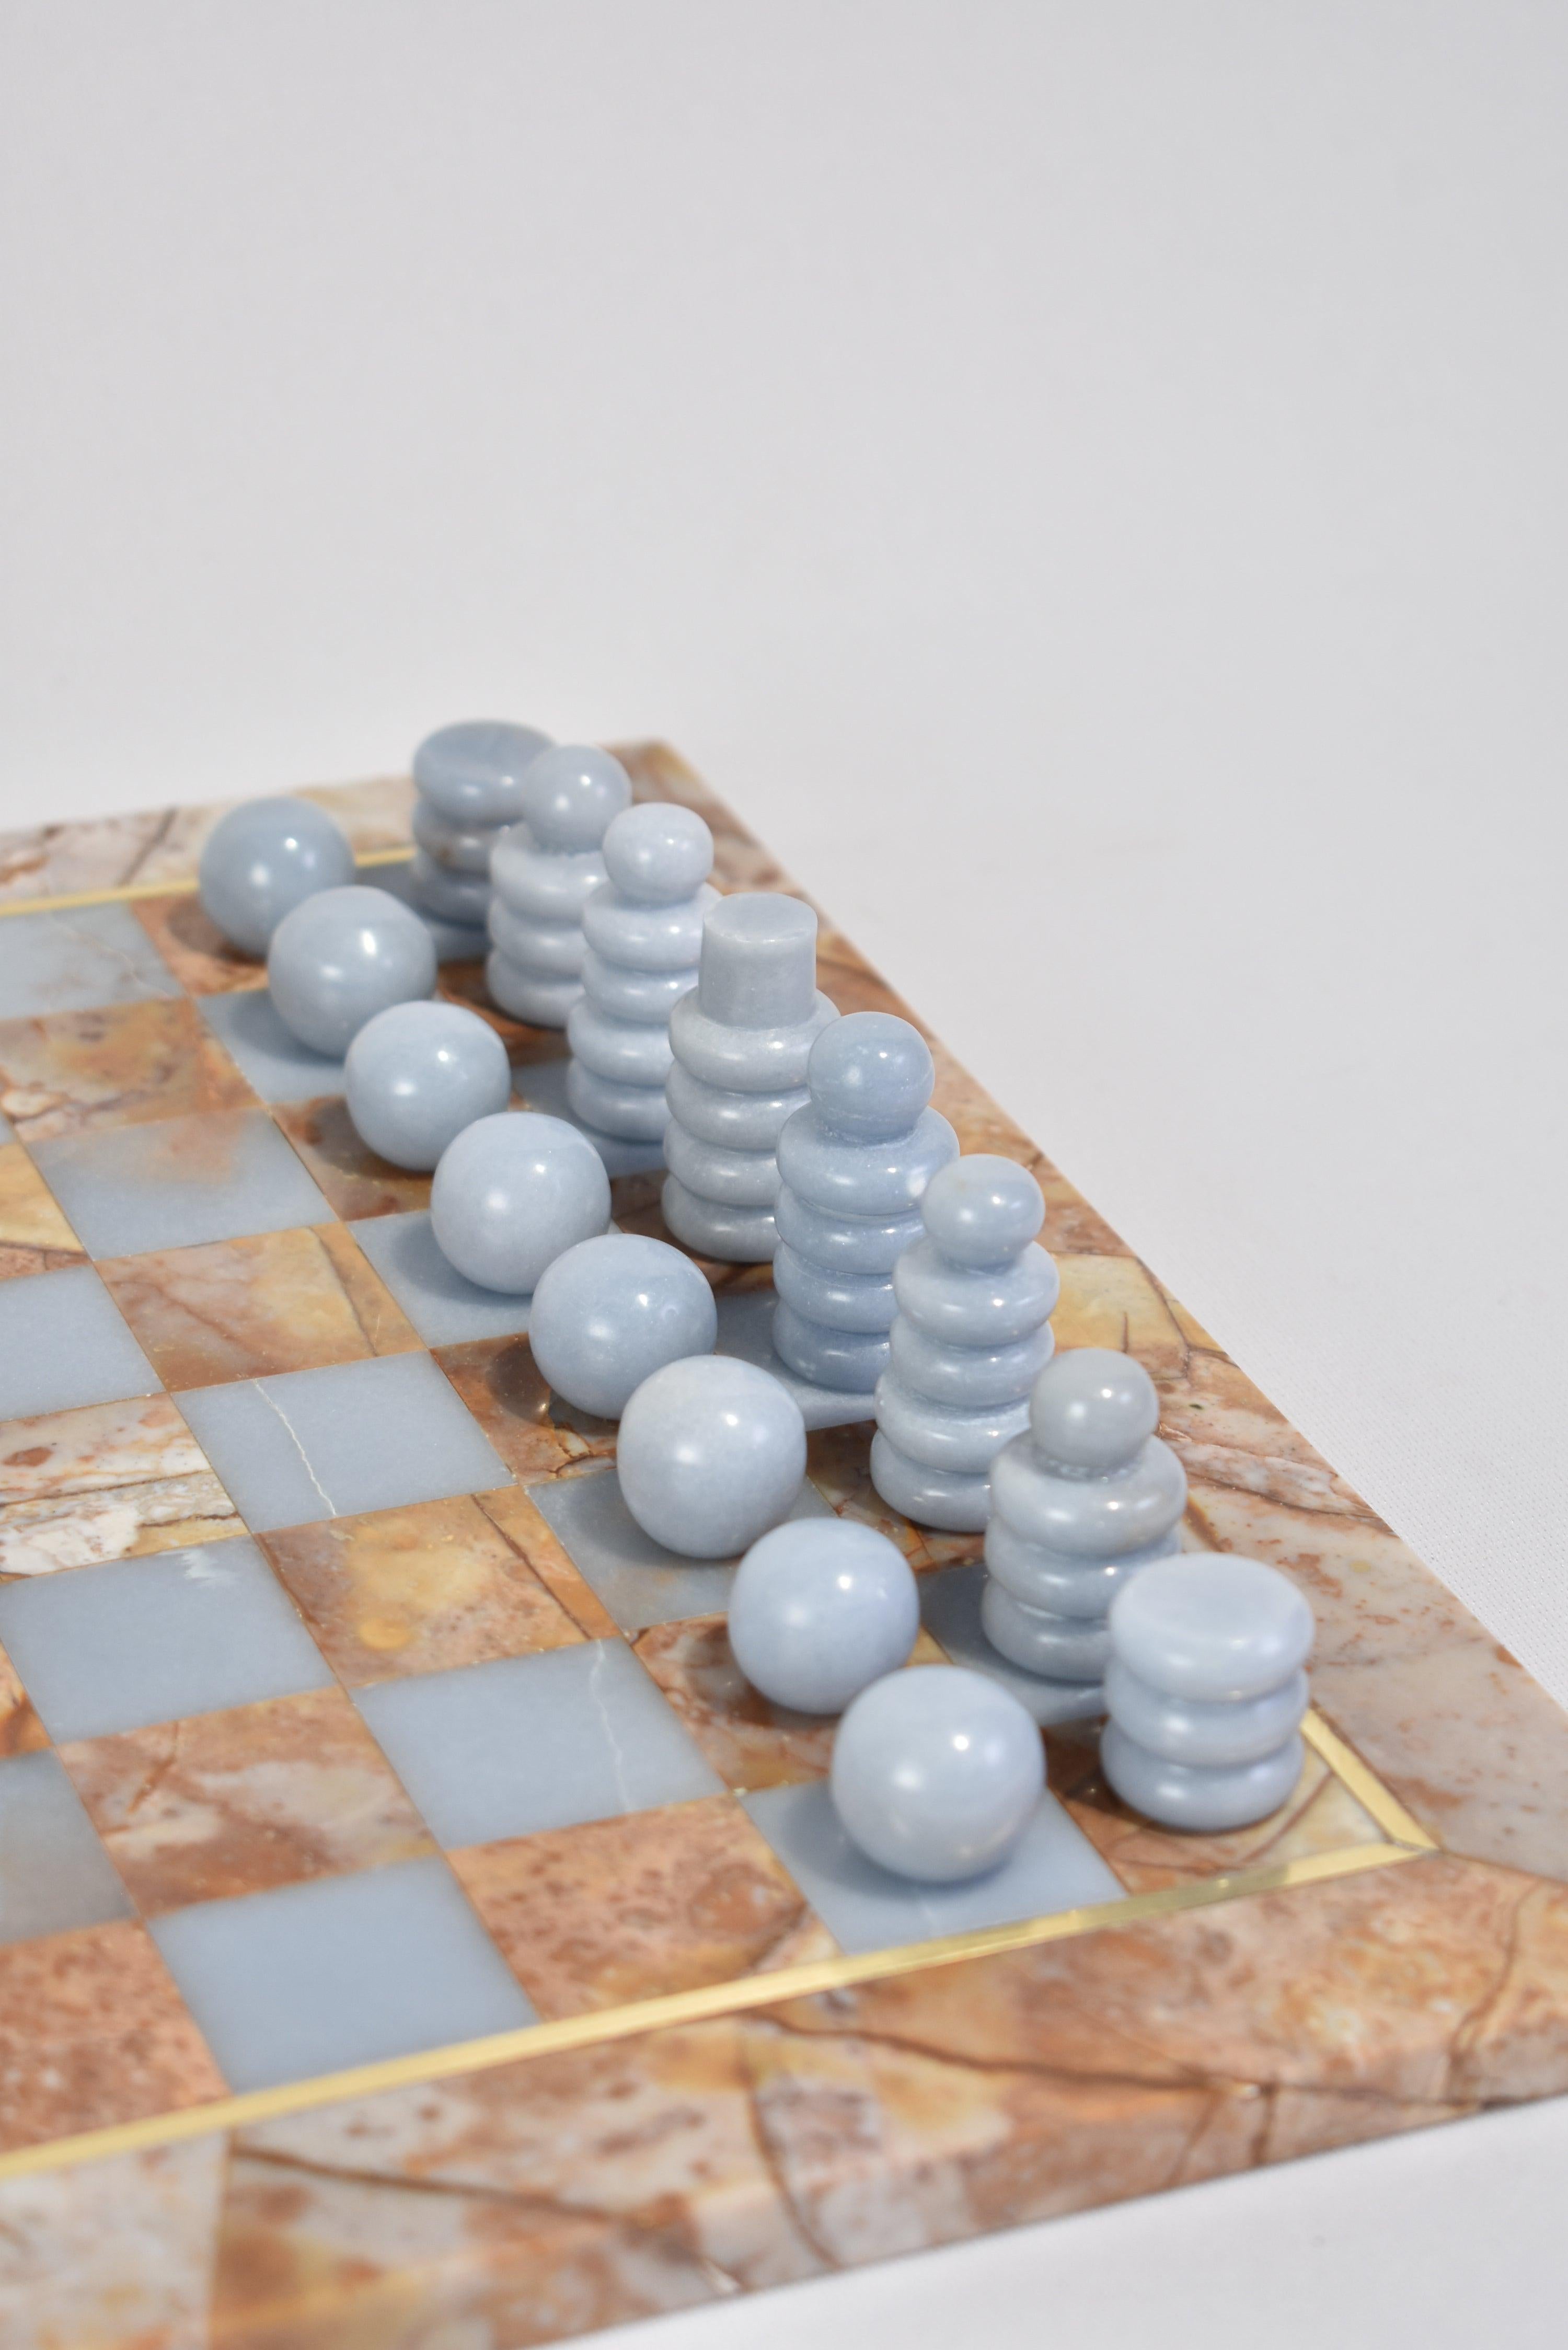 stone chess board